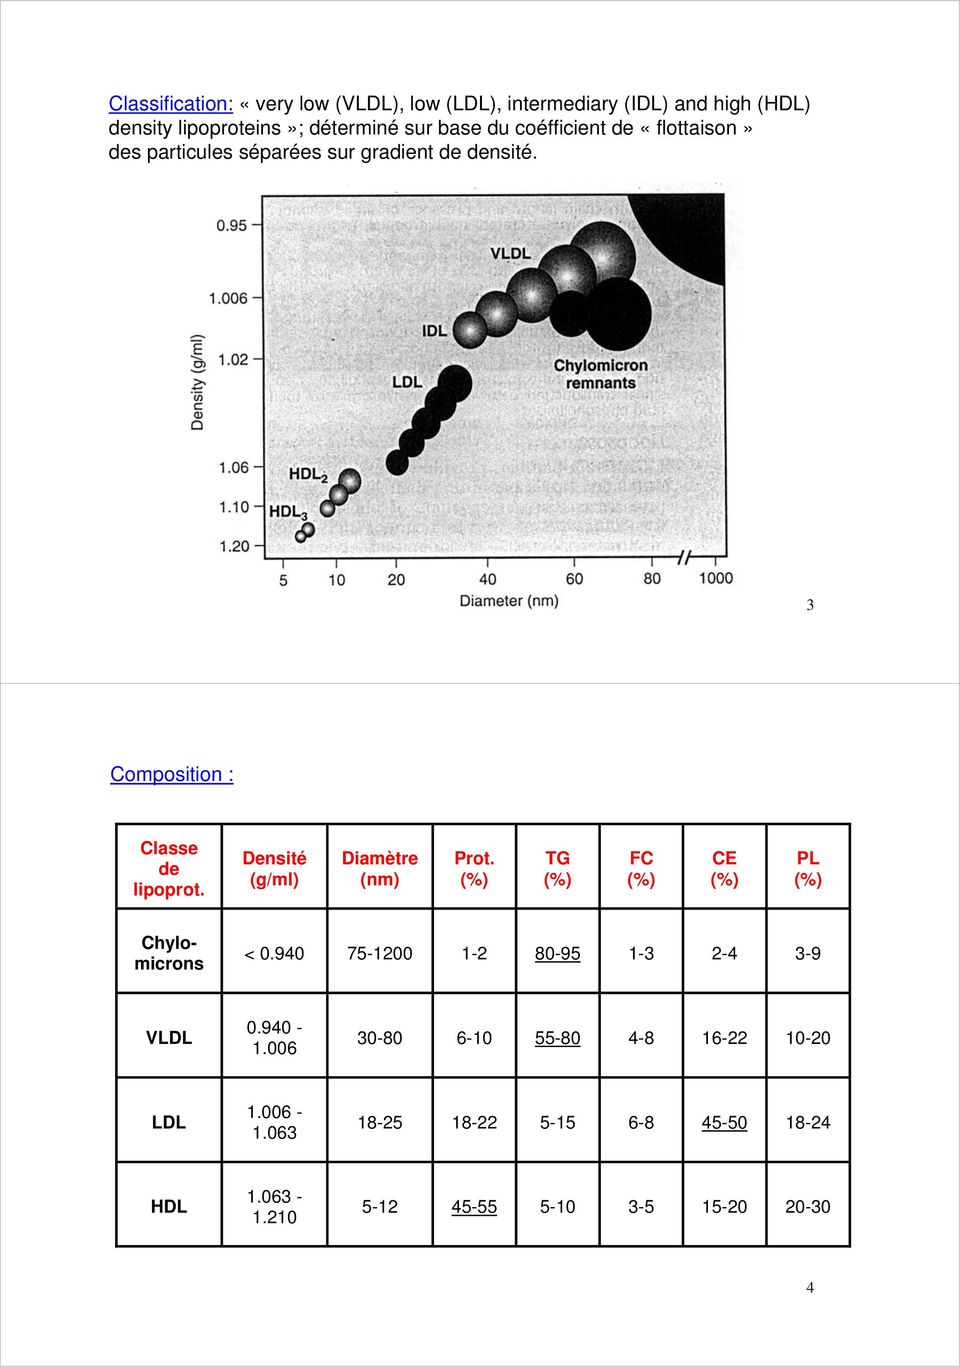 Densité (g/ml) Diamètre (nm) Prot. (%) TG (%) FC (%) CE (%) PL (%) Chylomicrons < 0.940 75-1200 1-2 80-95 1-3 2-4 3-9 VLDL 0.